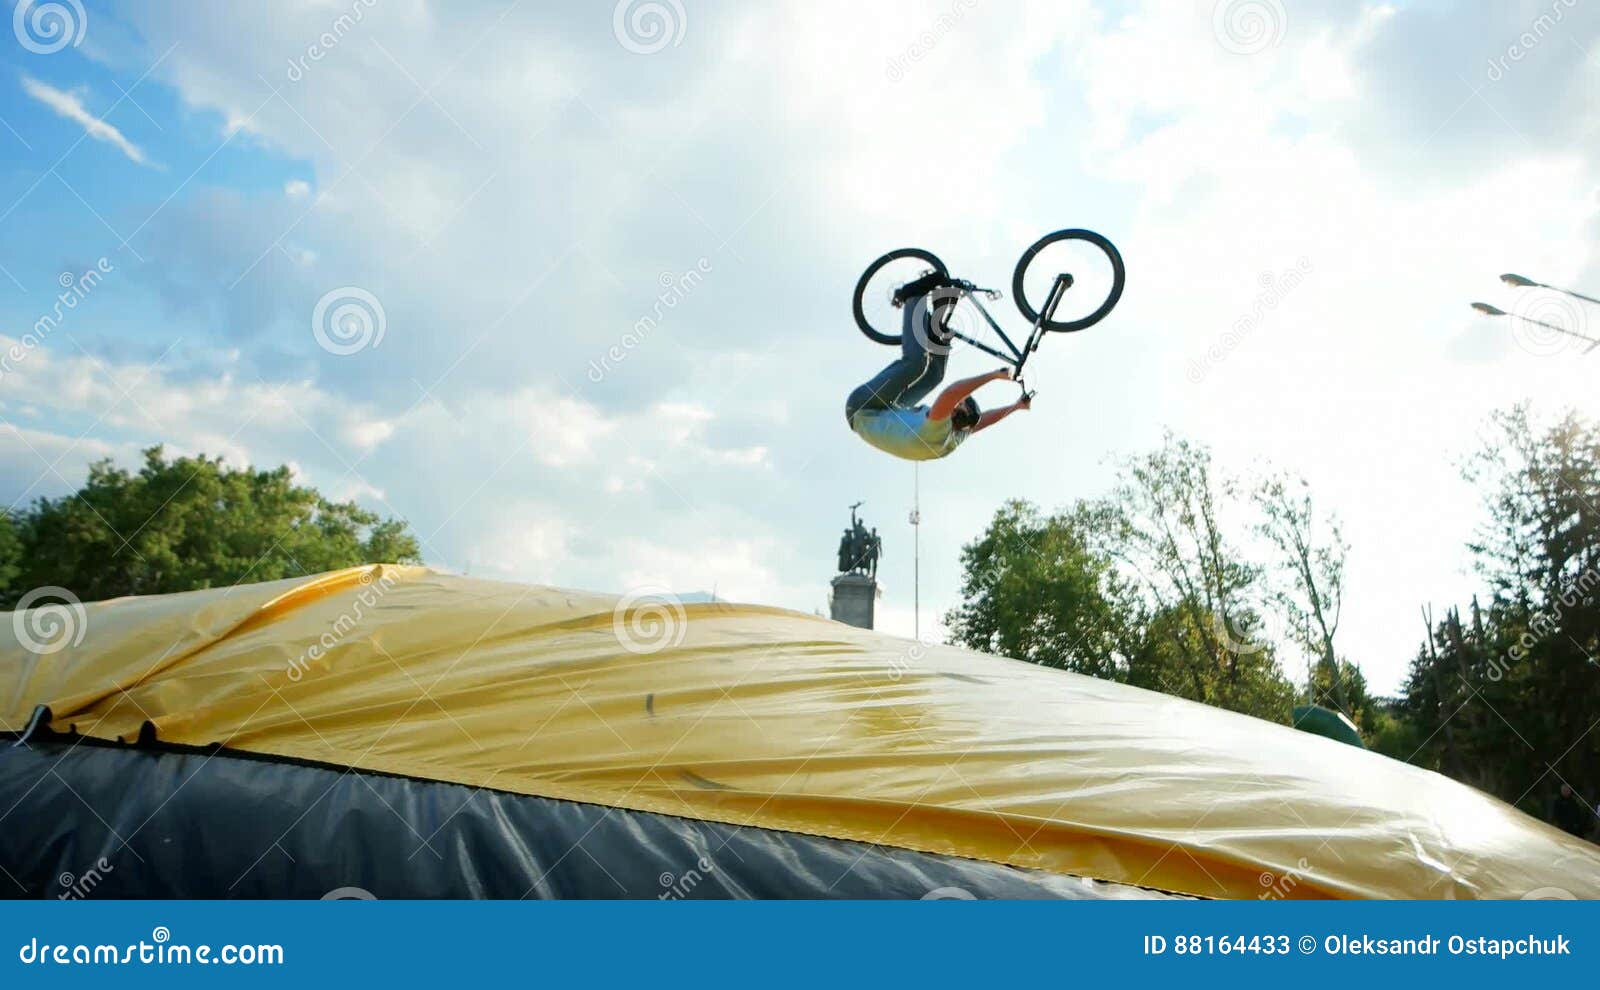 trampoline bmx bike for sale